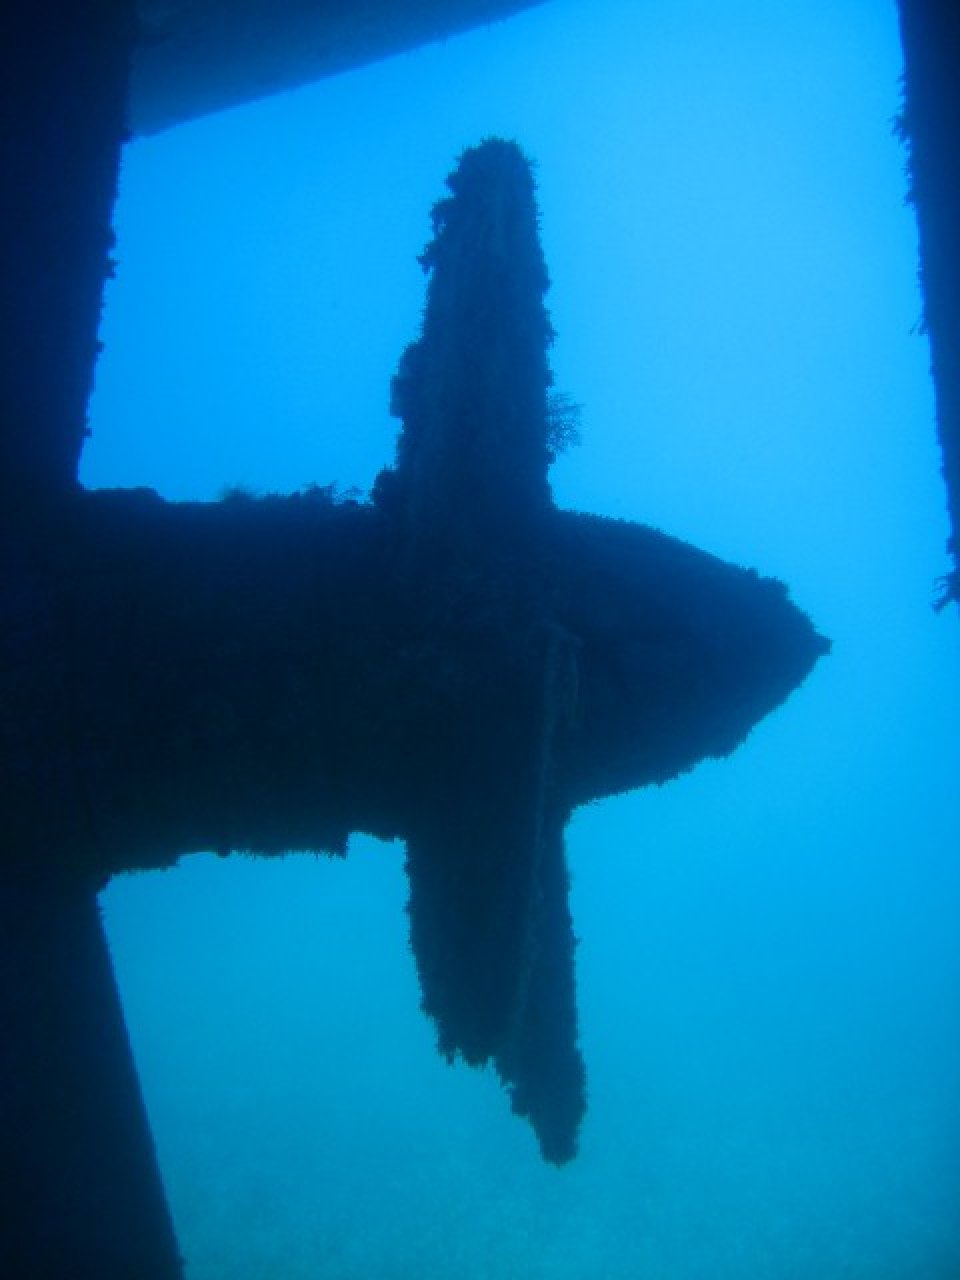 One of the Limassol Wrecks